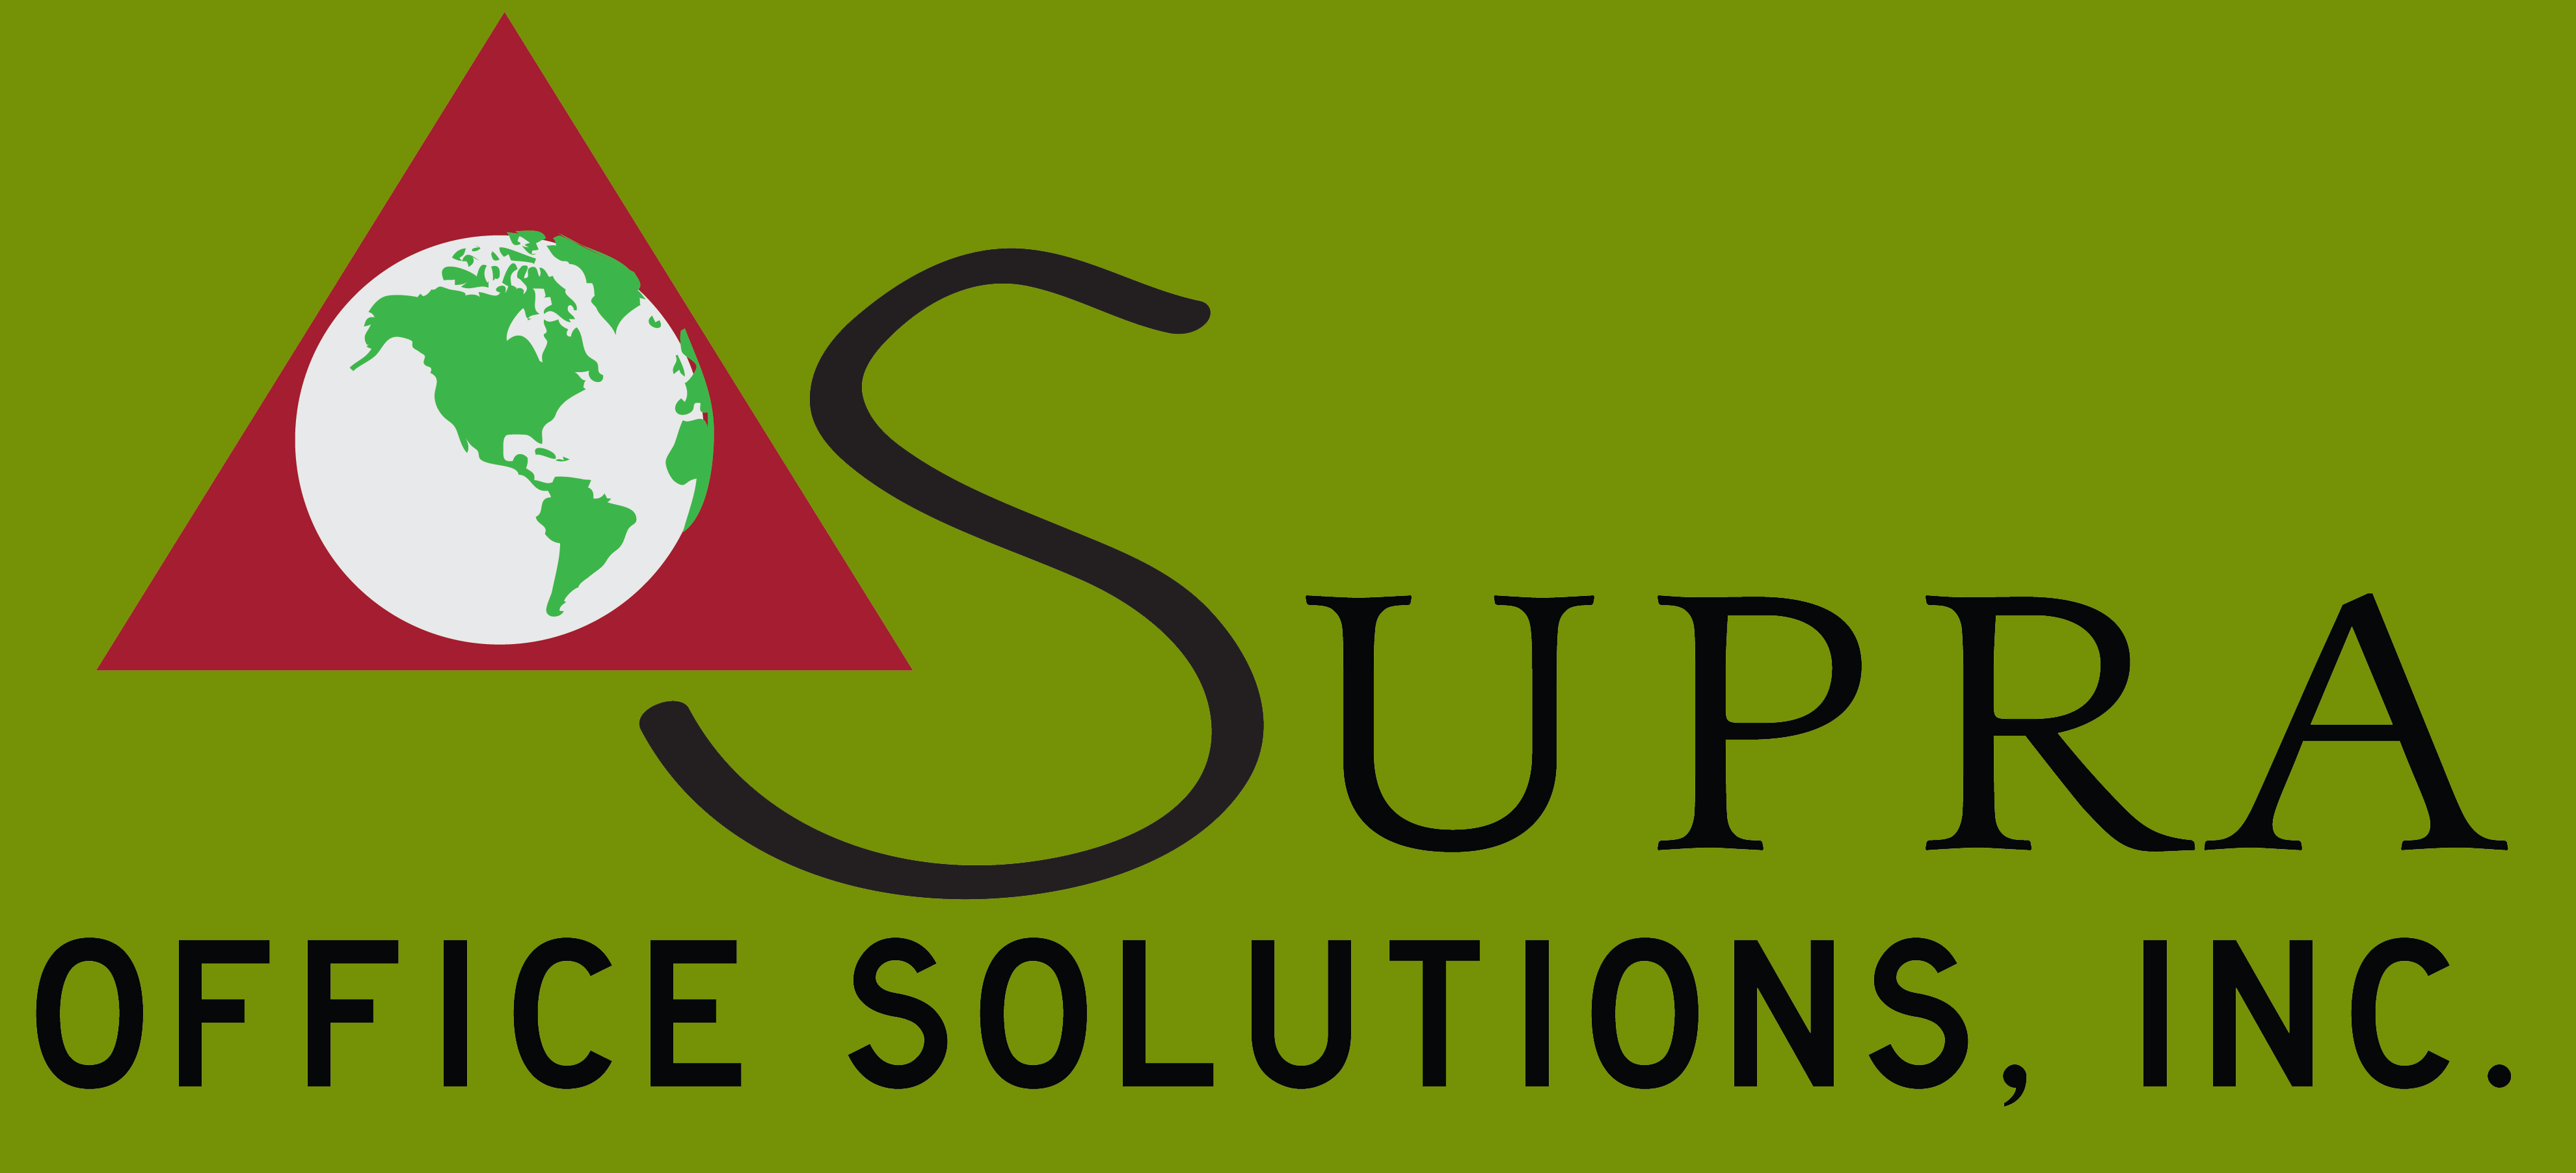 supra office solutions logo